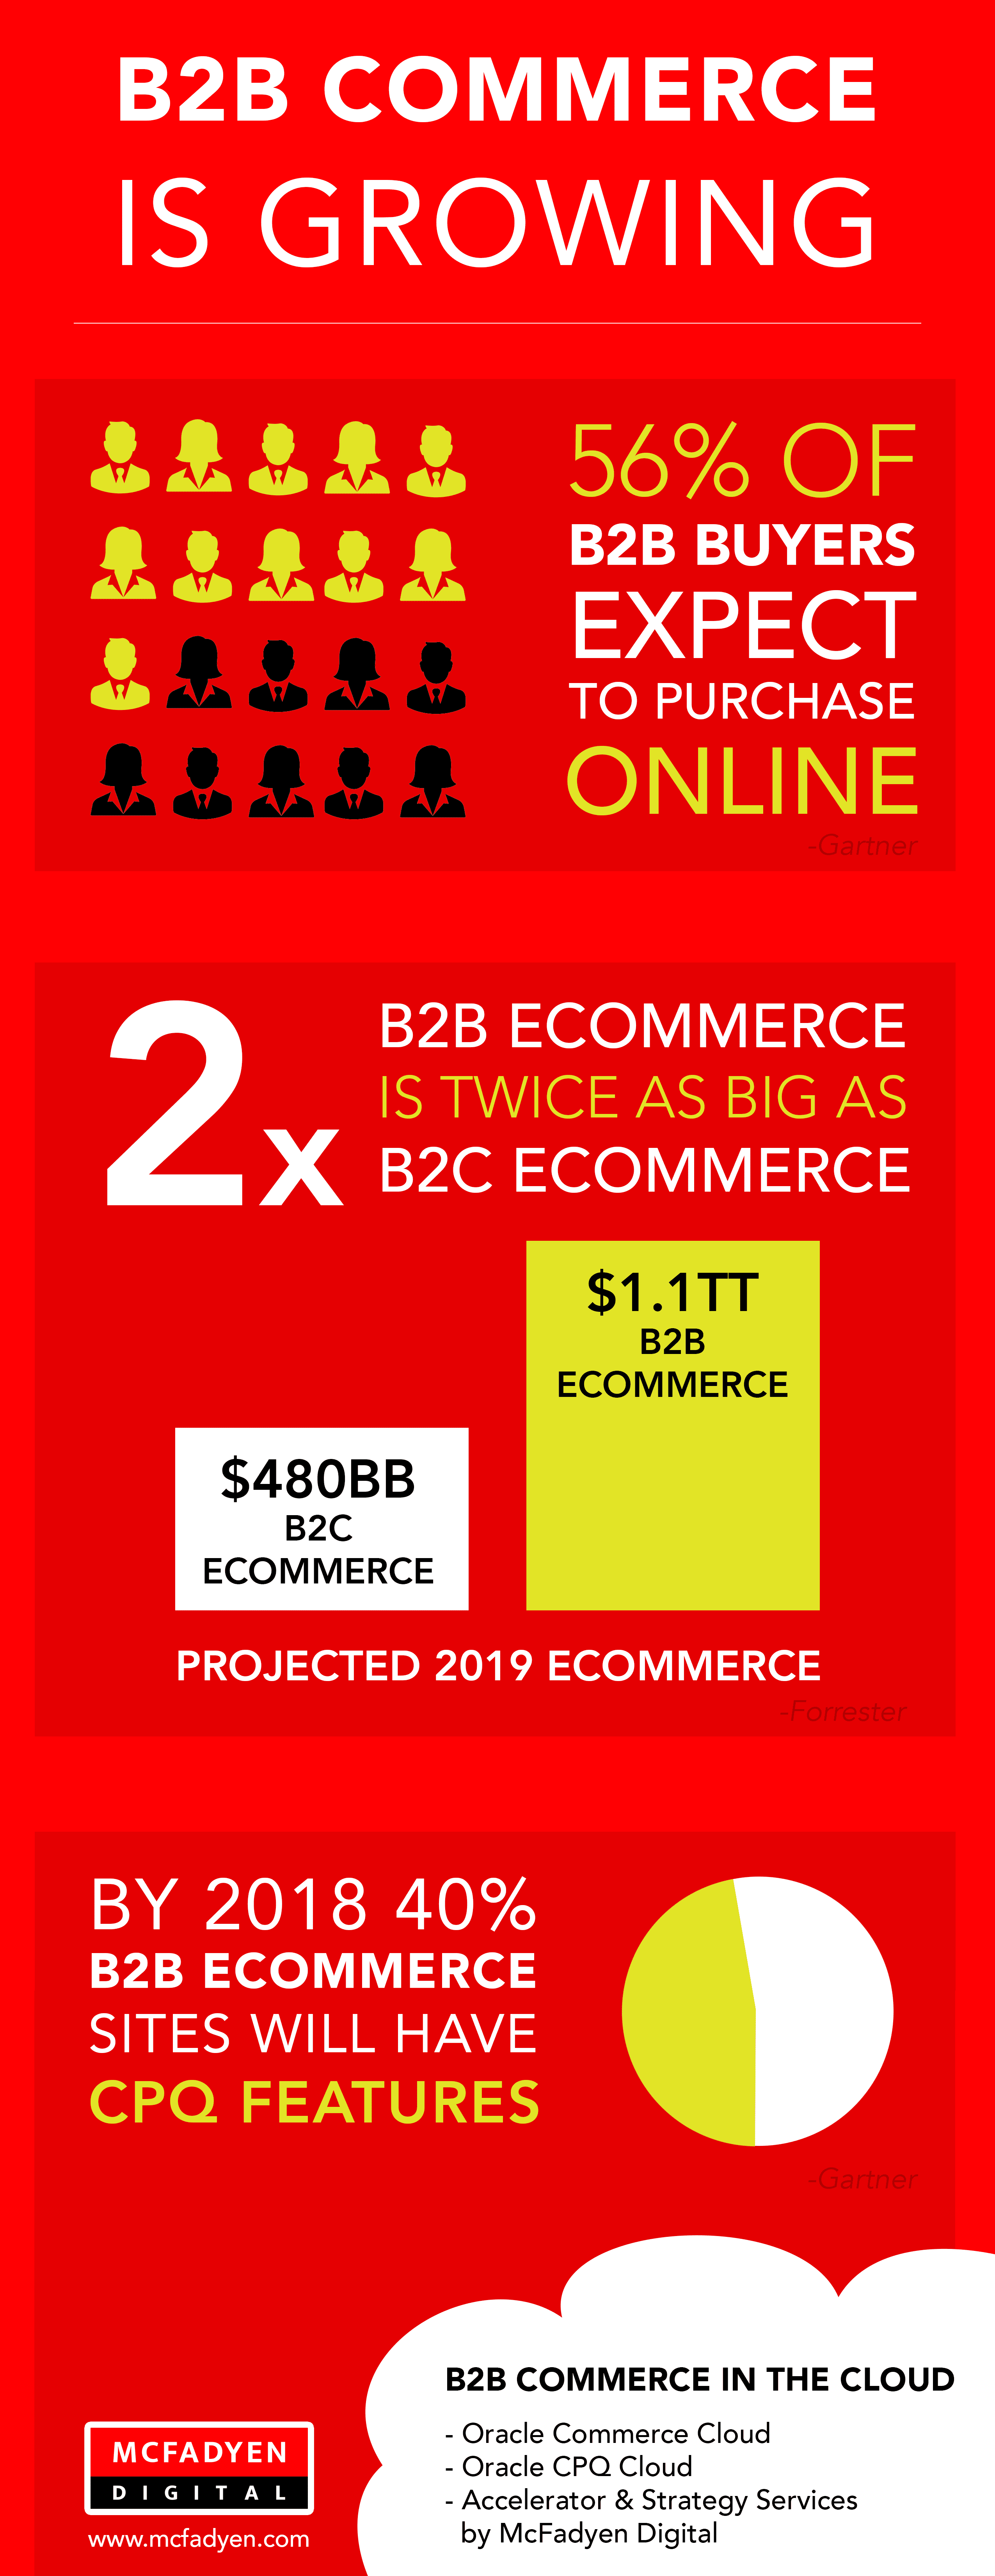 B2B Ecommerce Business is Growing - McFadyen Digital